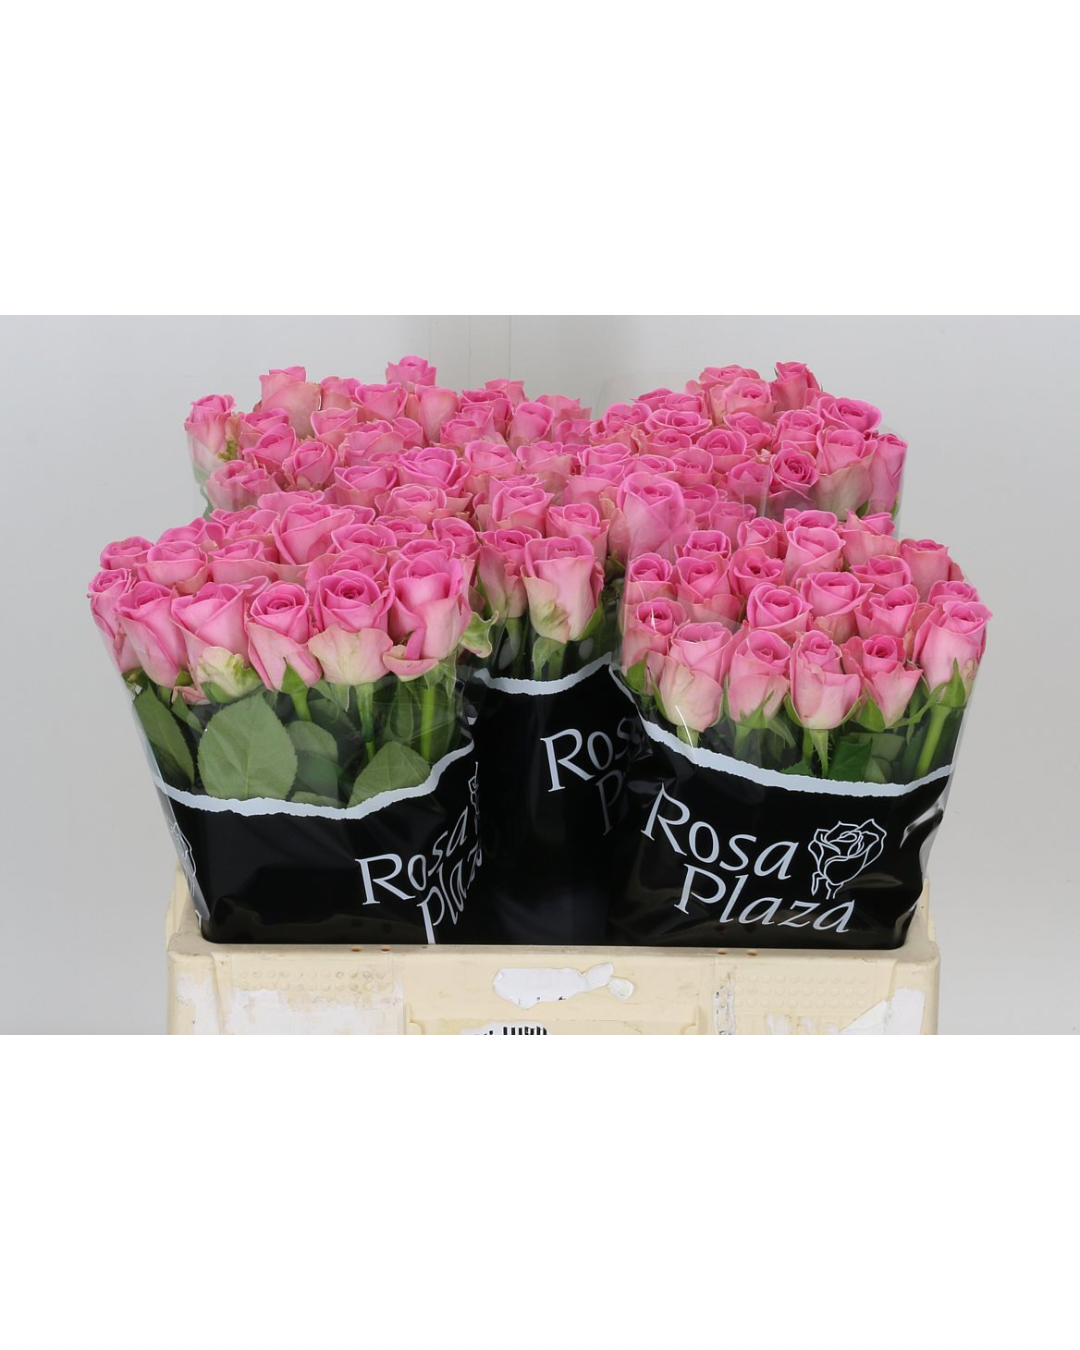 Rose Aqua x 20 stems